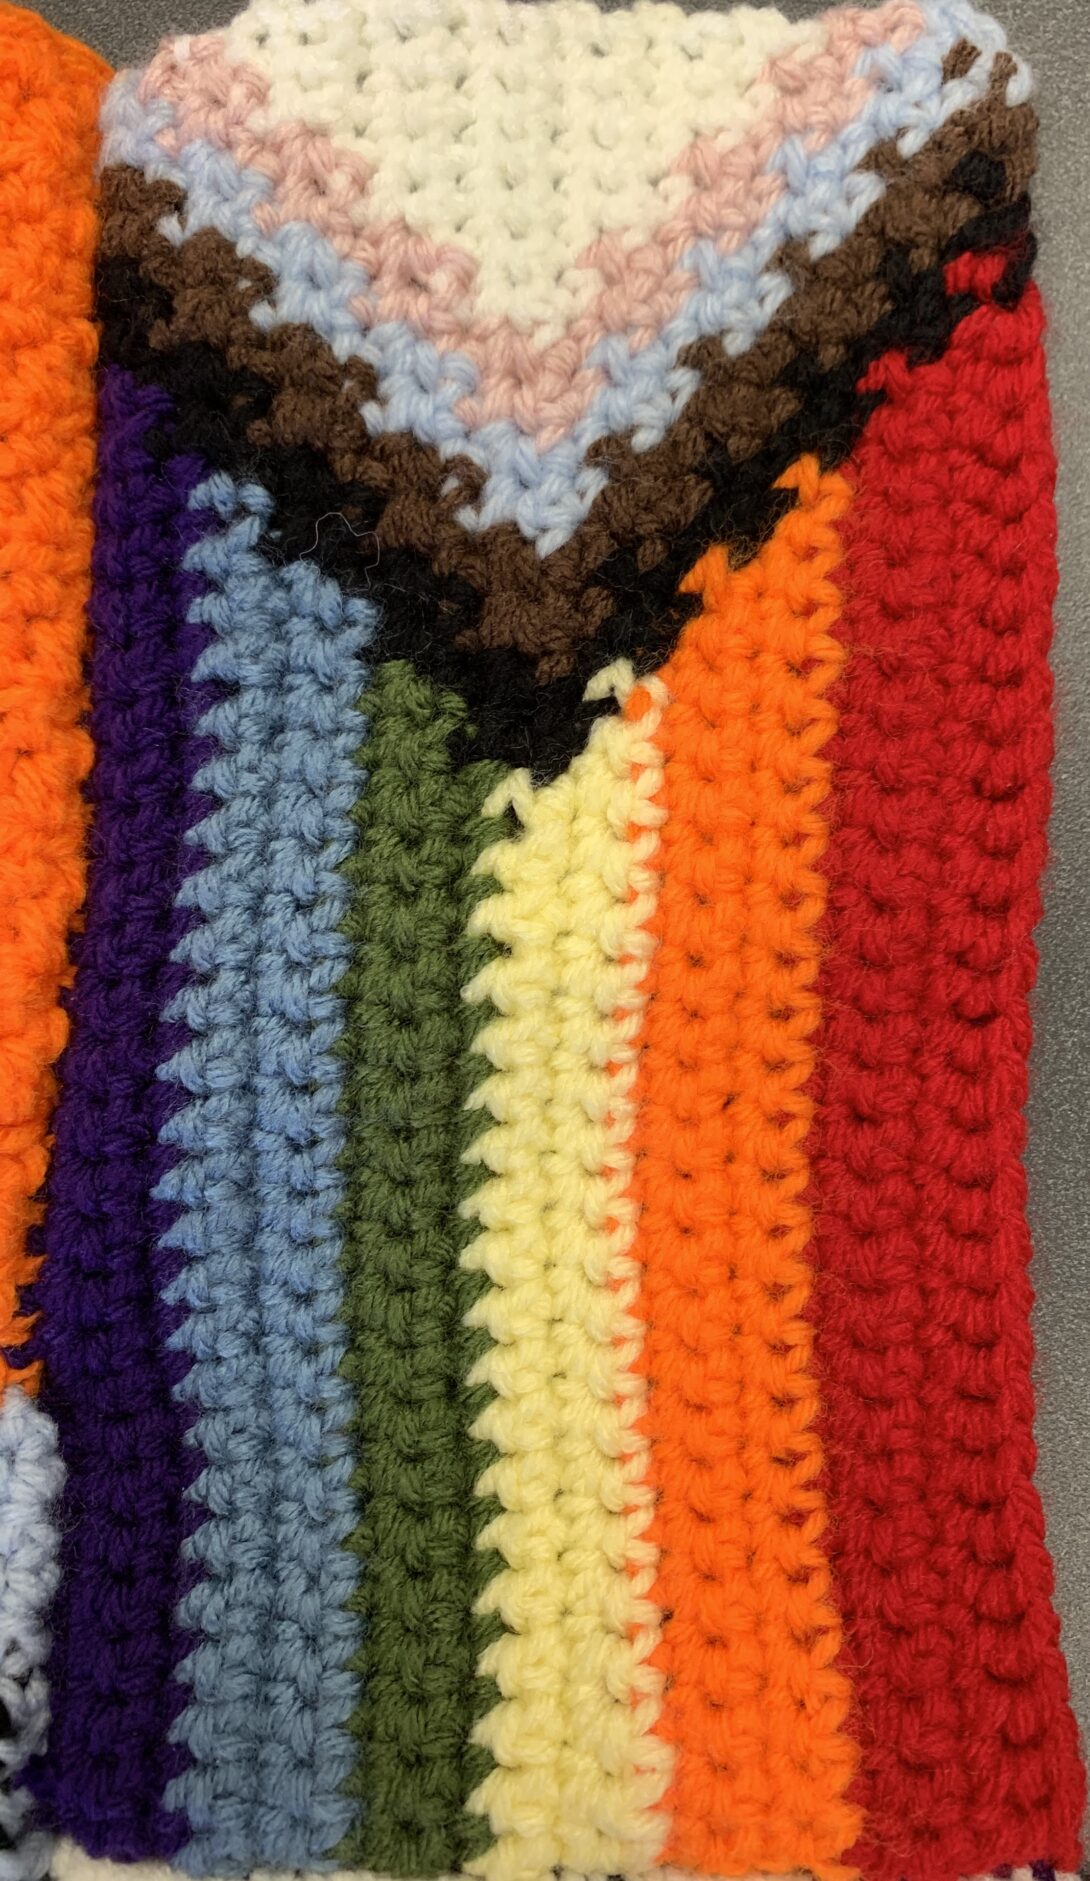 A crocheted progress pride flag